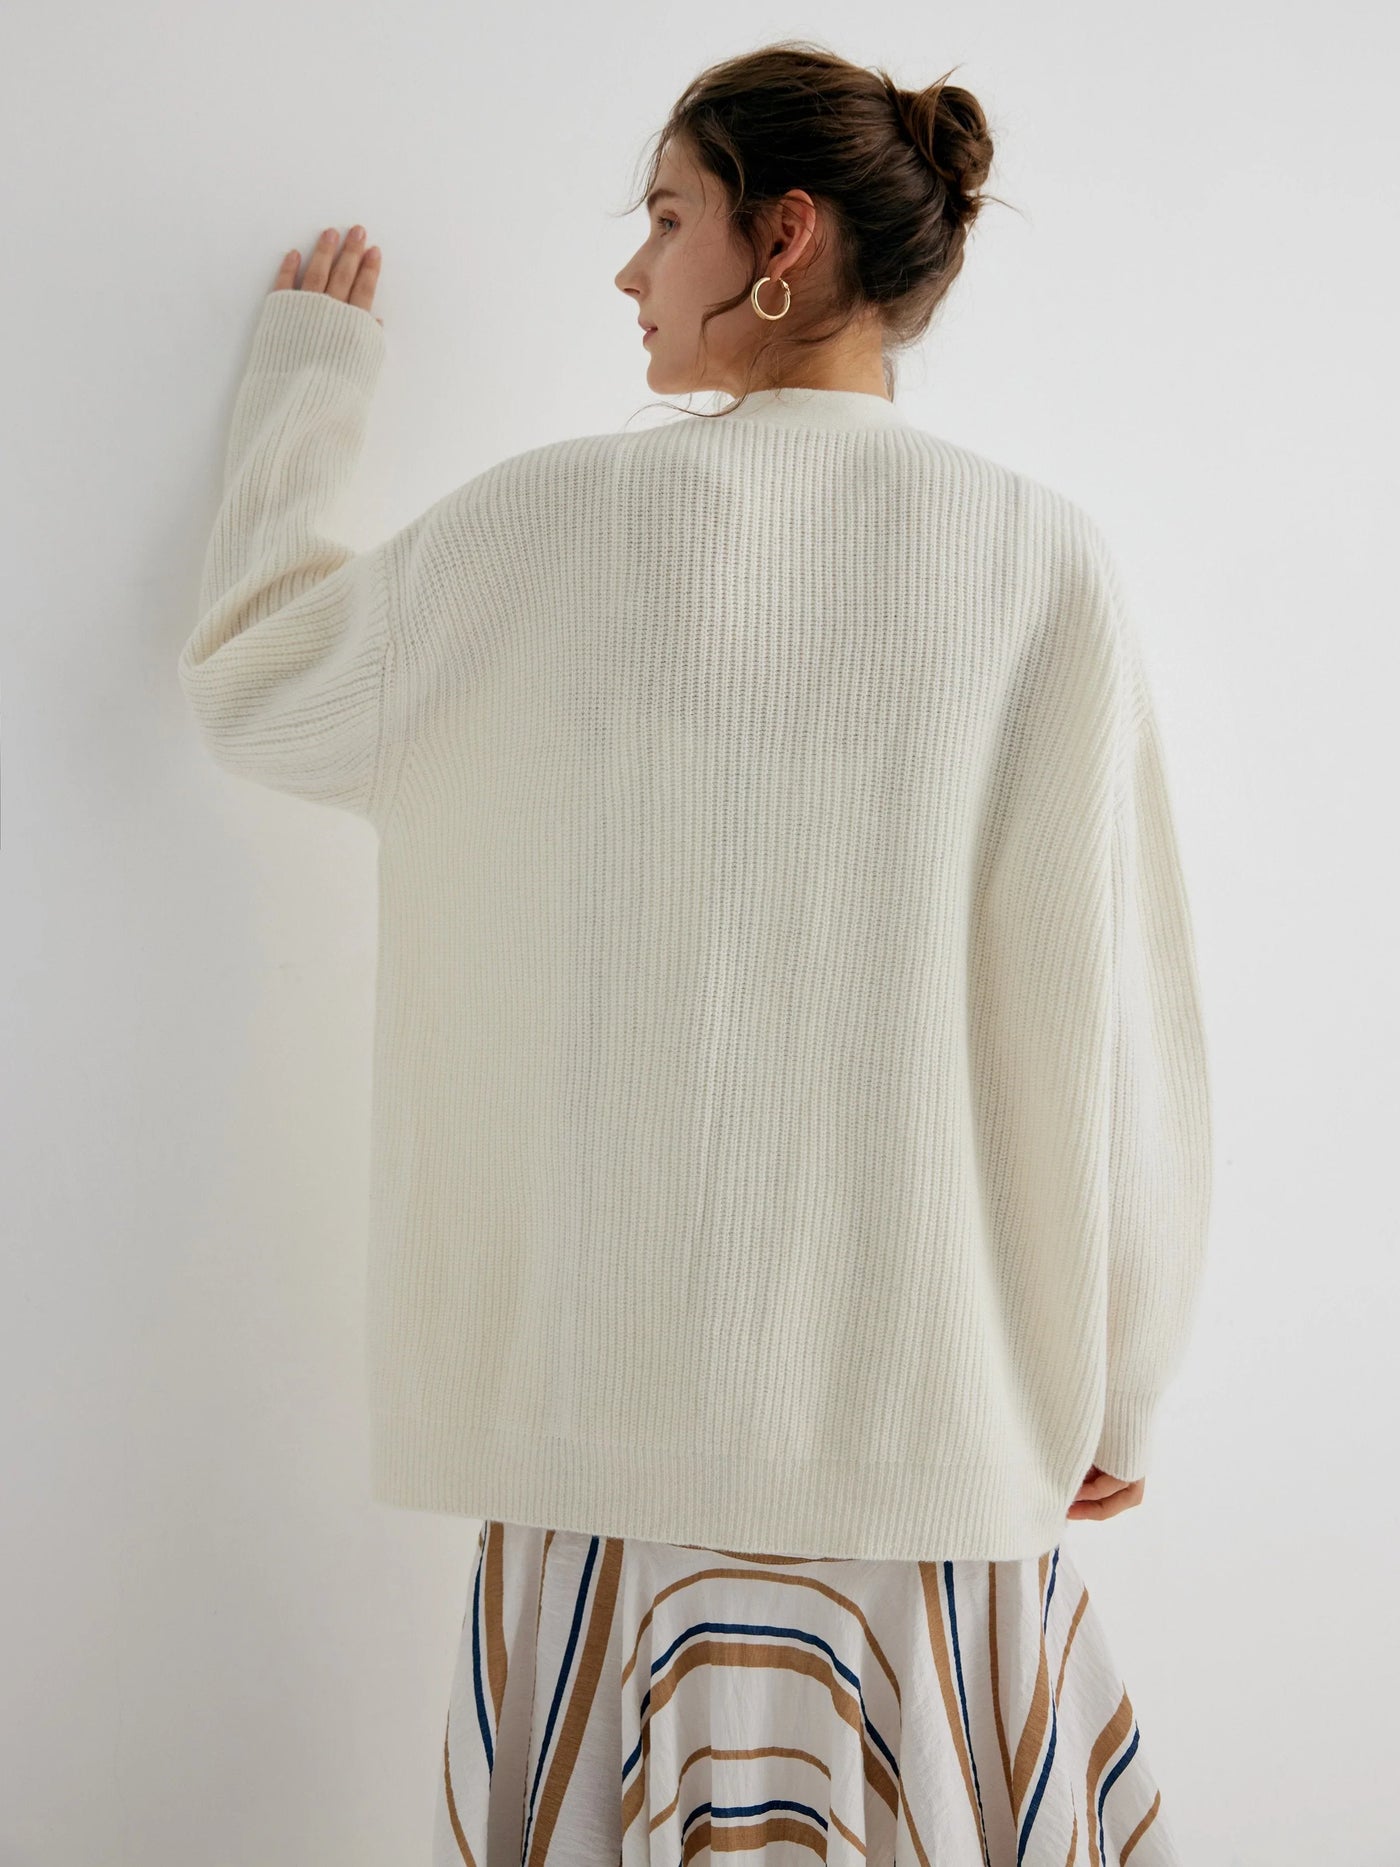 The Essential 100% Merino Wool White Oversized Cardigan